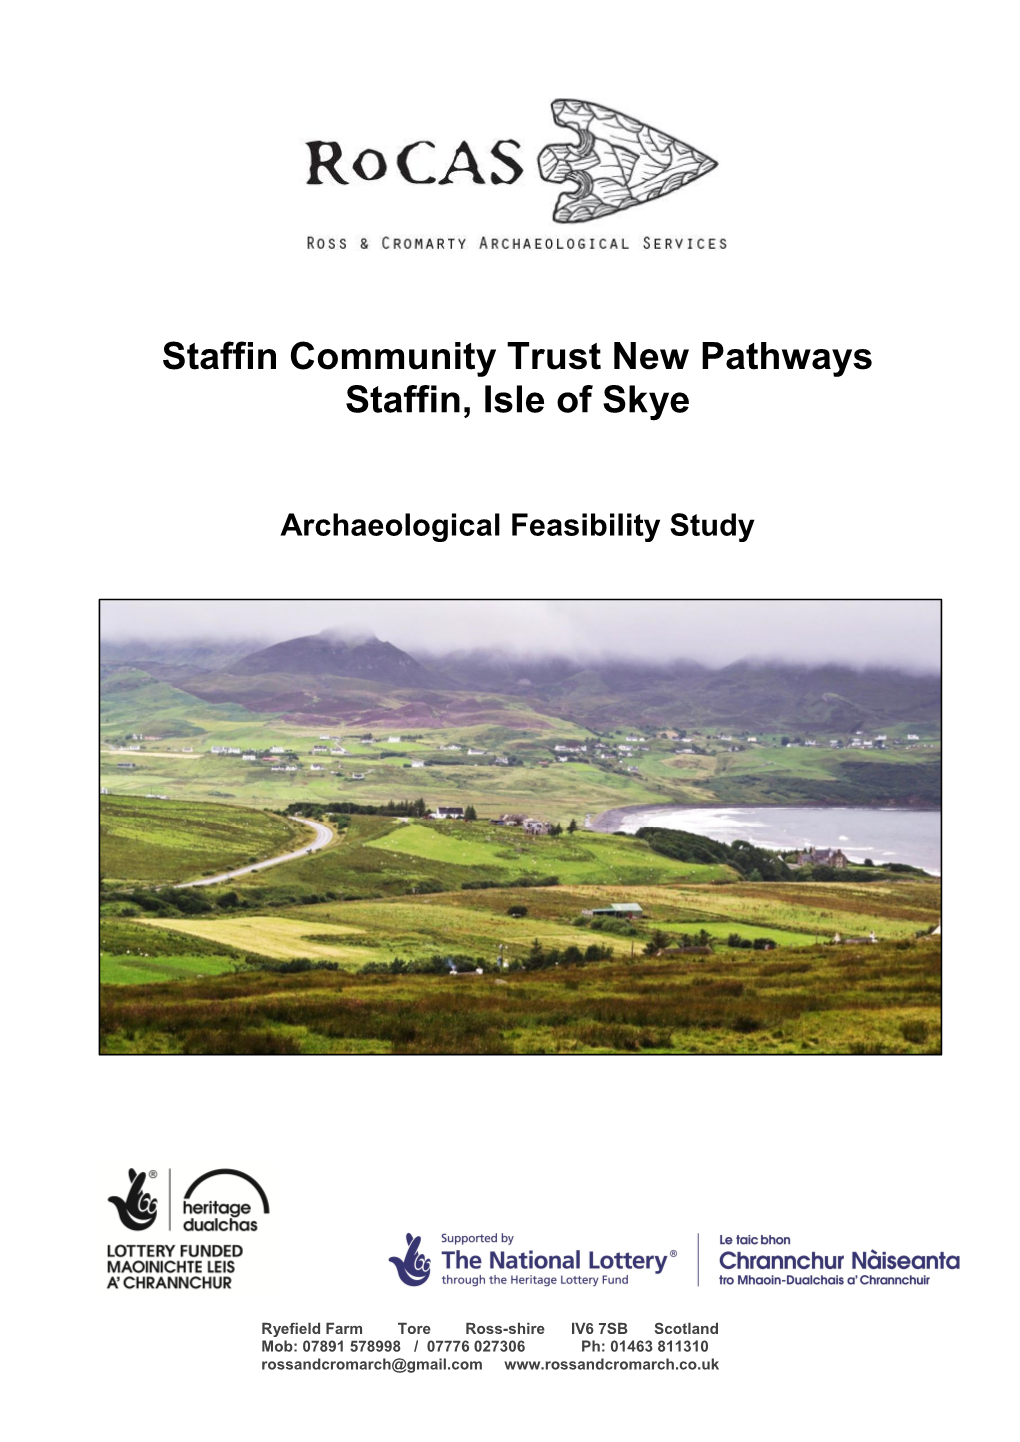 Staffin Community Trust New Pathways Staffin, Isle of Skye